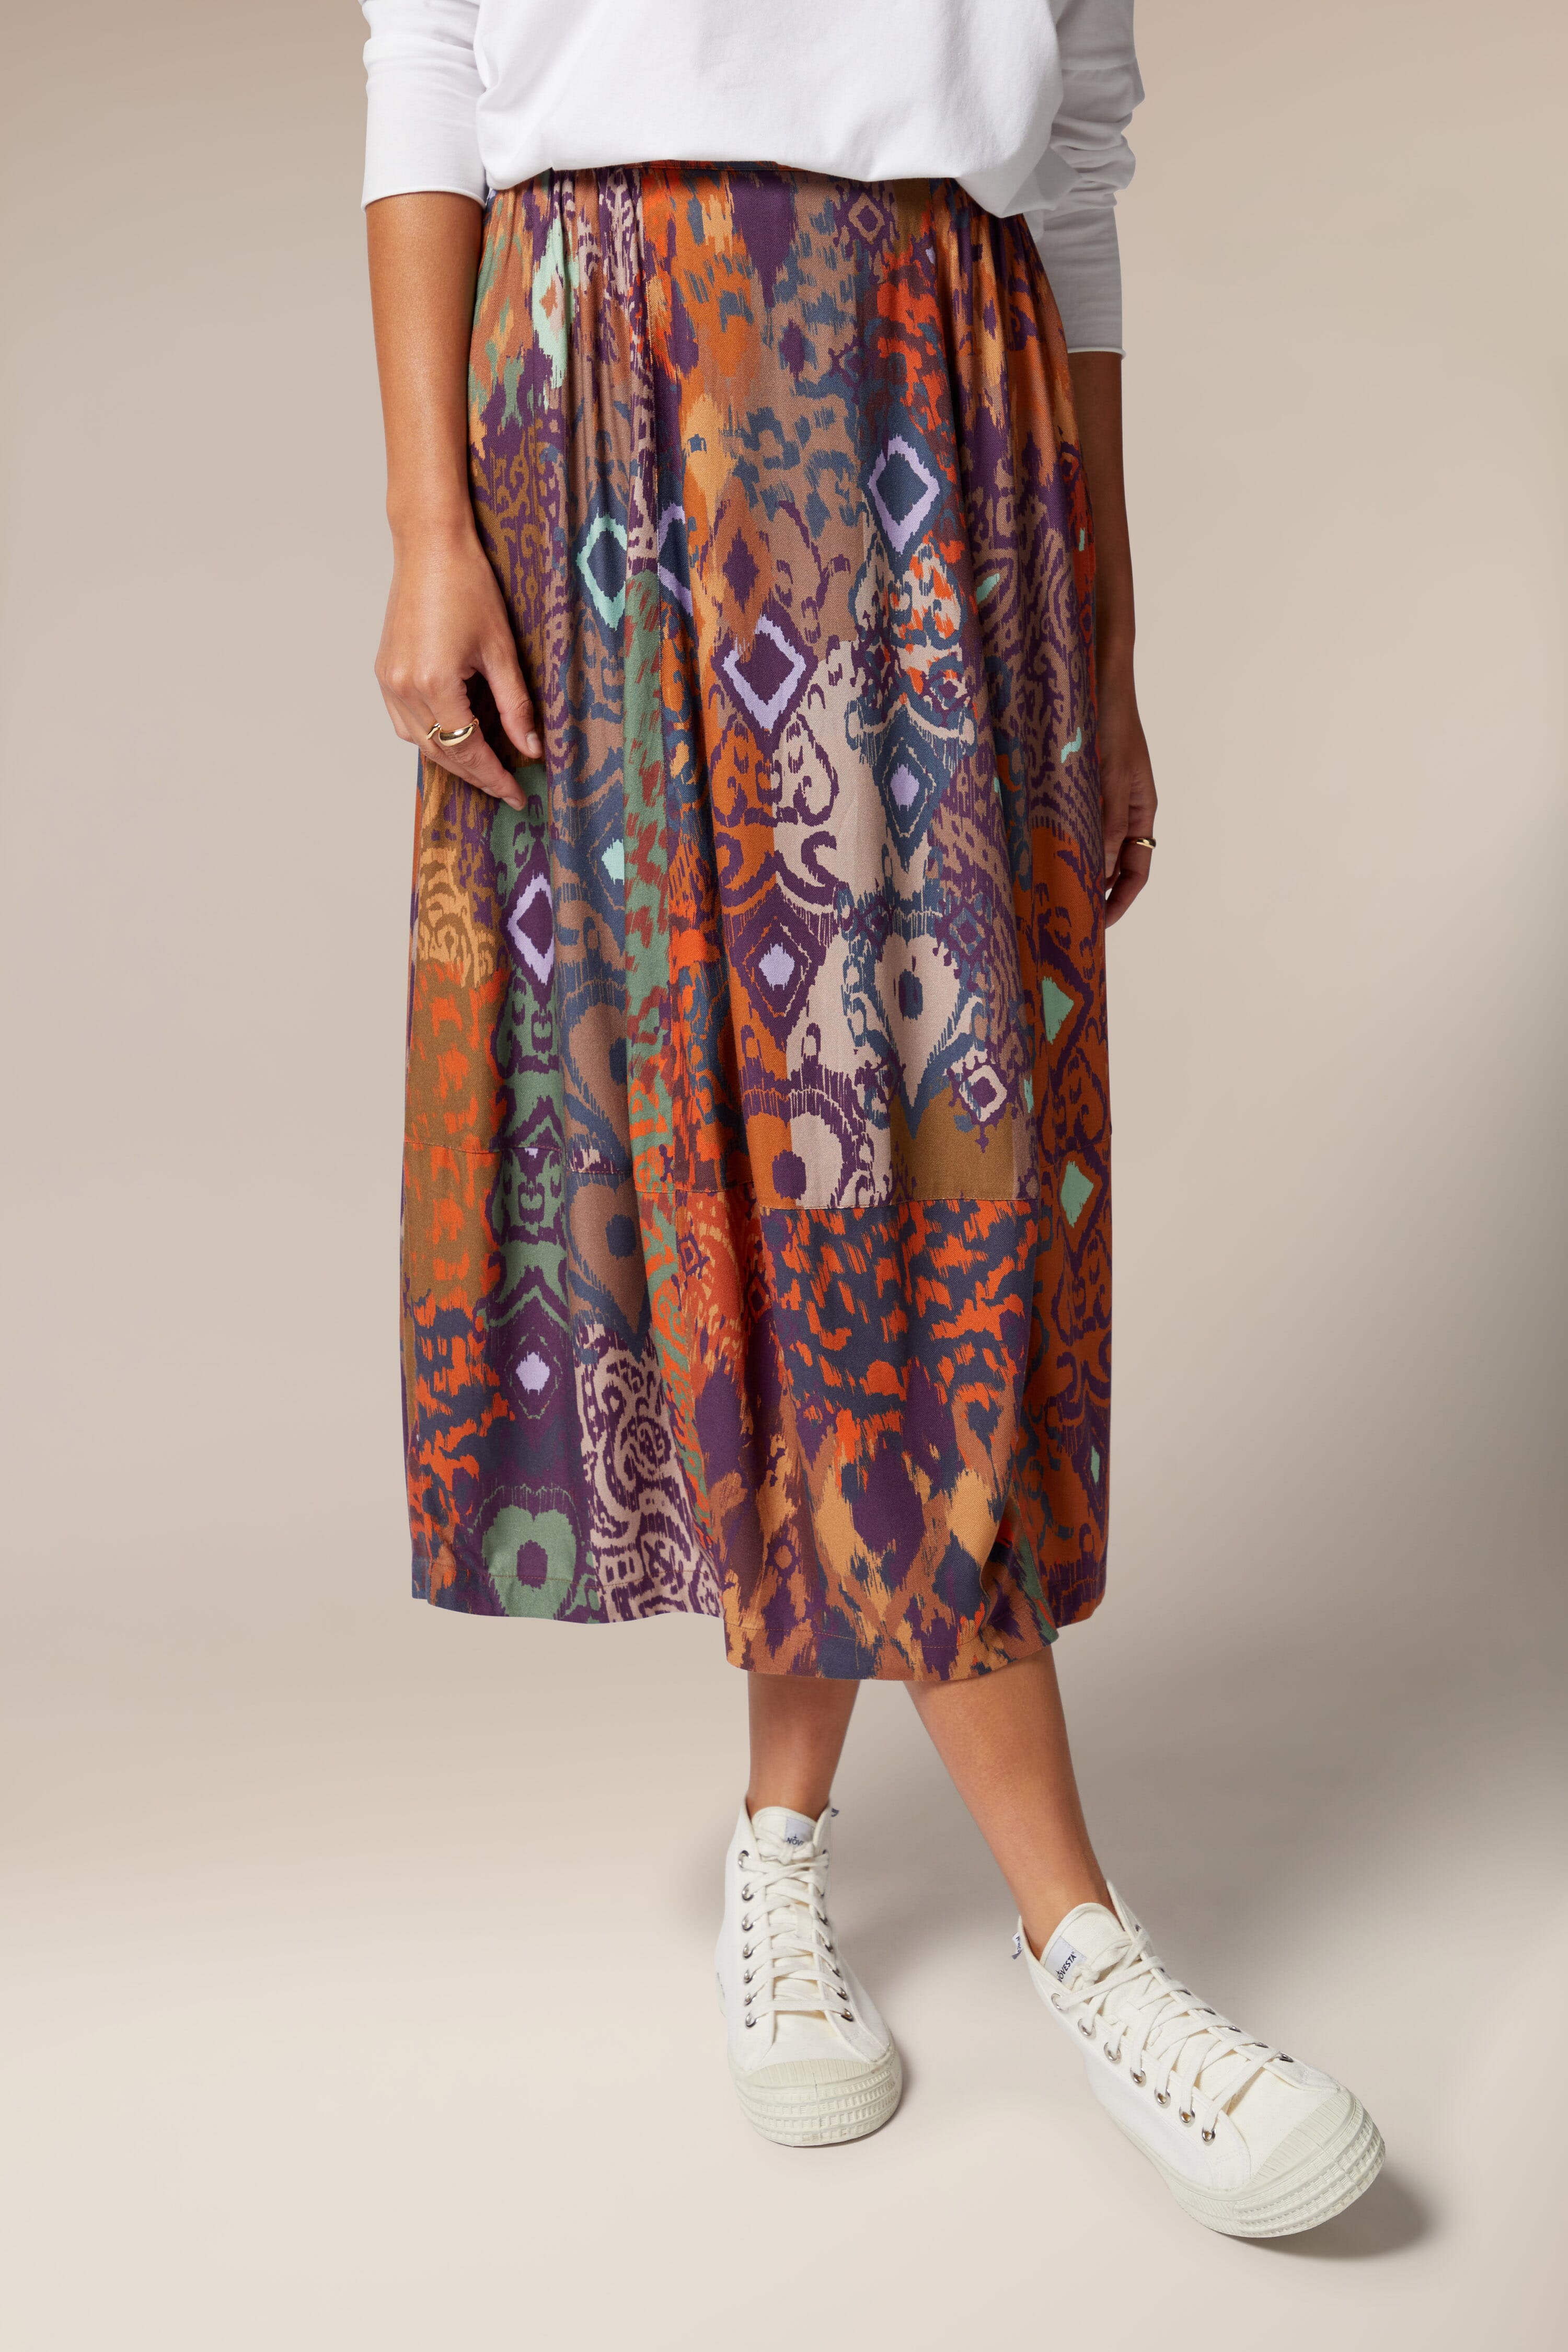 Buy Vintage 60s 70s Ikat Cotton Print Bohemian Skirt/ Handmade Hippie Gypsy  Skirt Online in India - Etsy